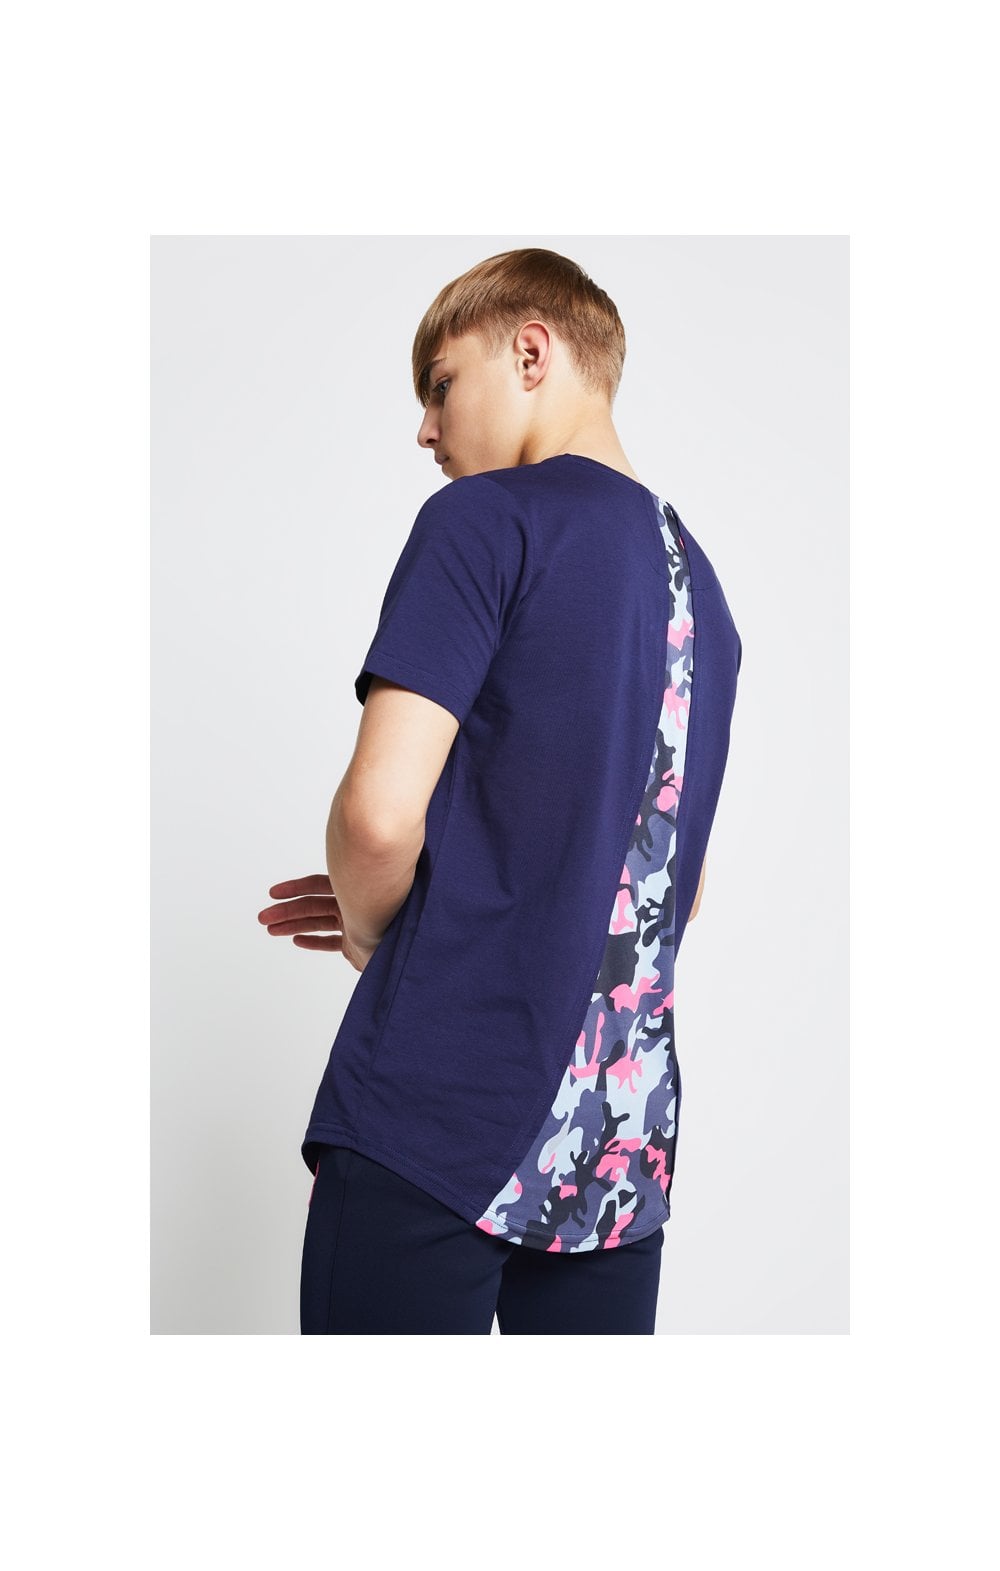 Illusive London T-Shirt Schulterfrei - Marineblau und Neon Rosa Camouflage (2)